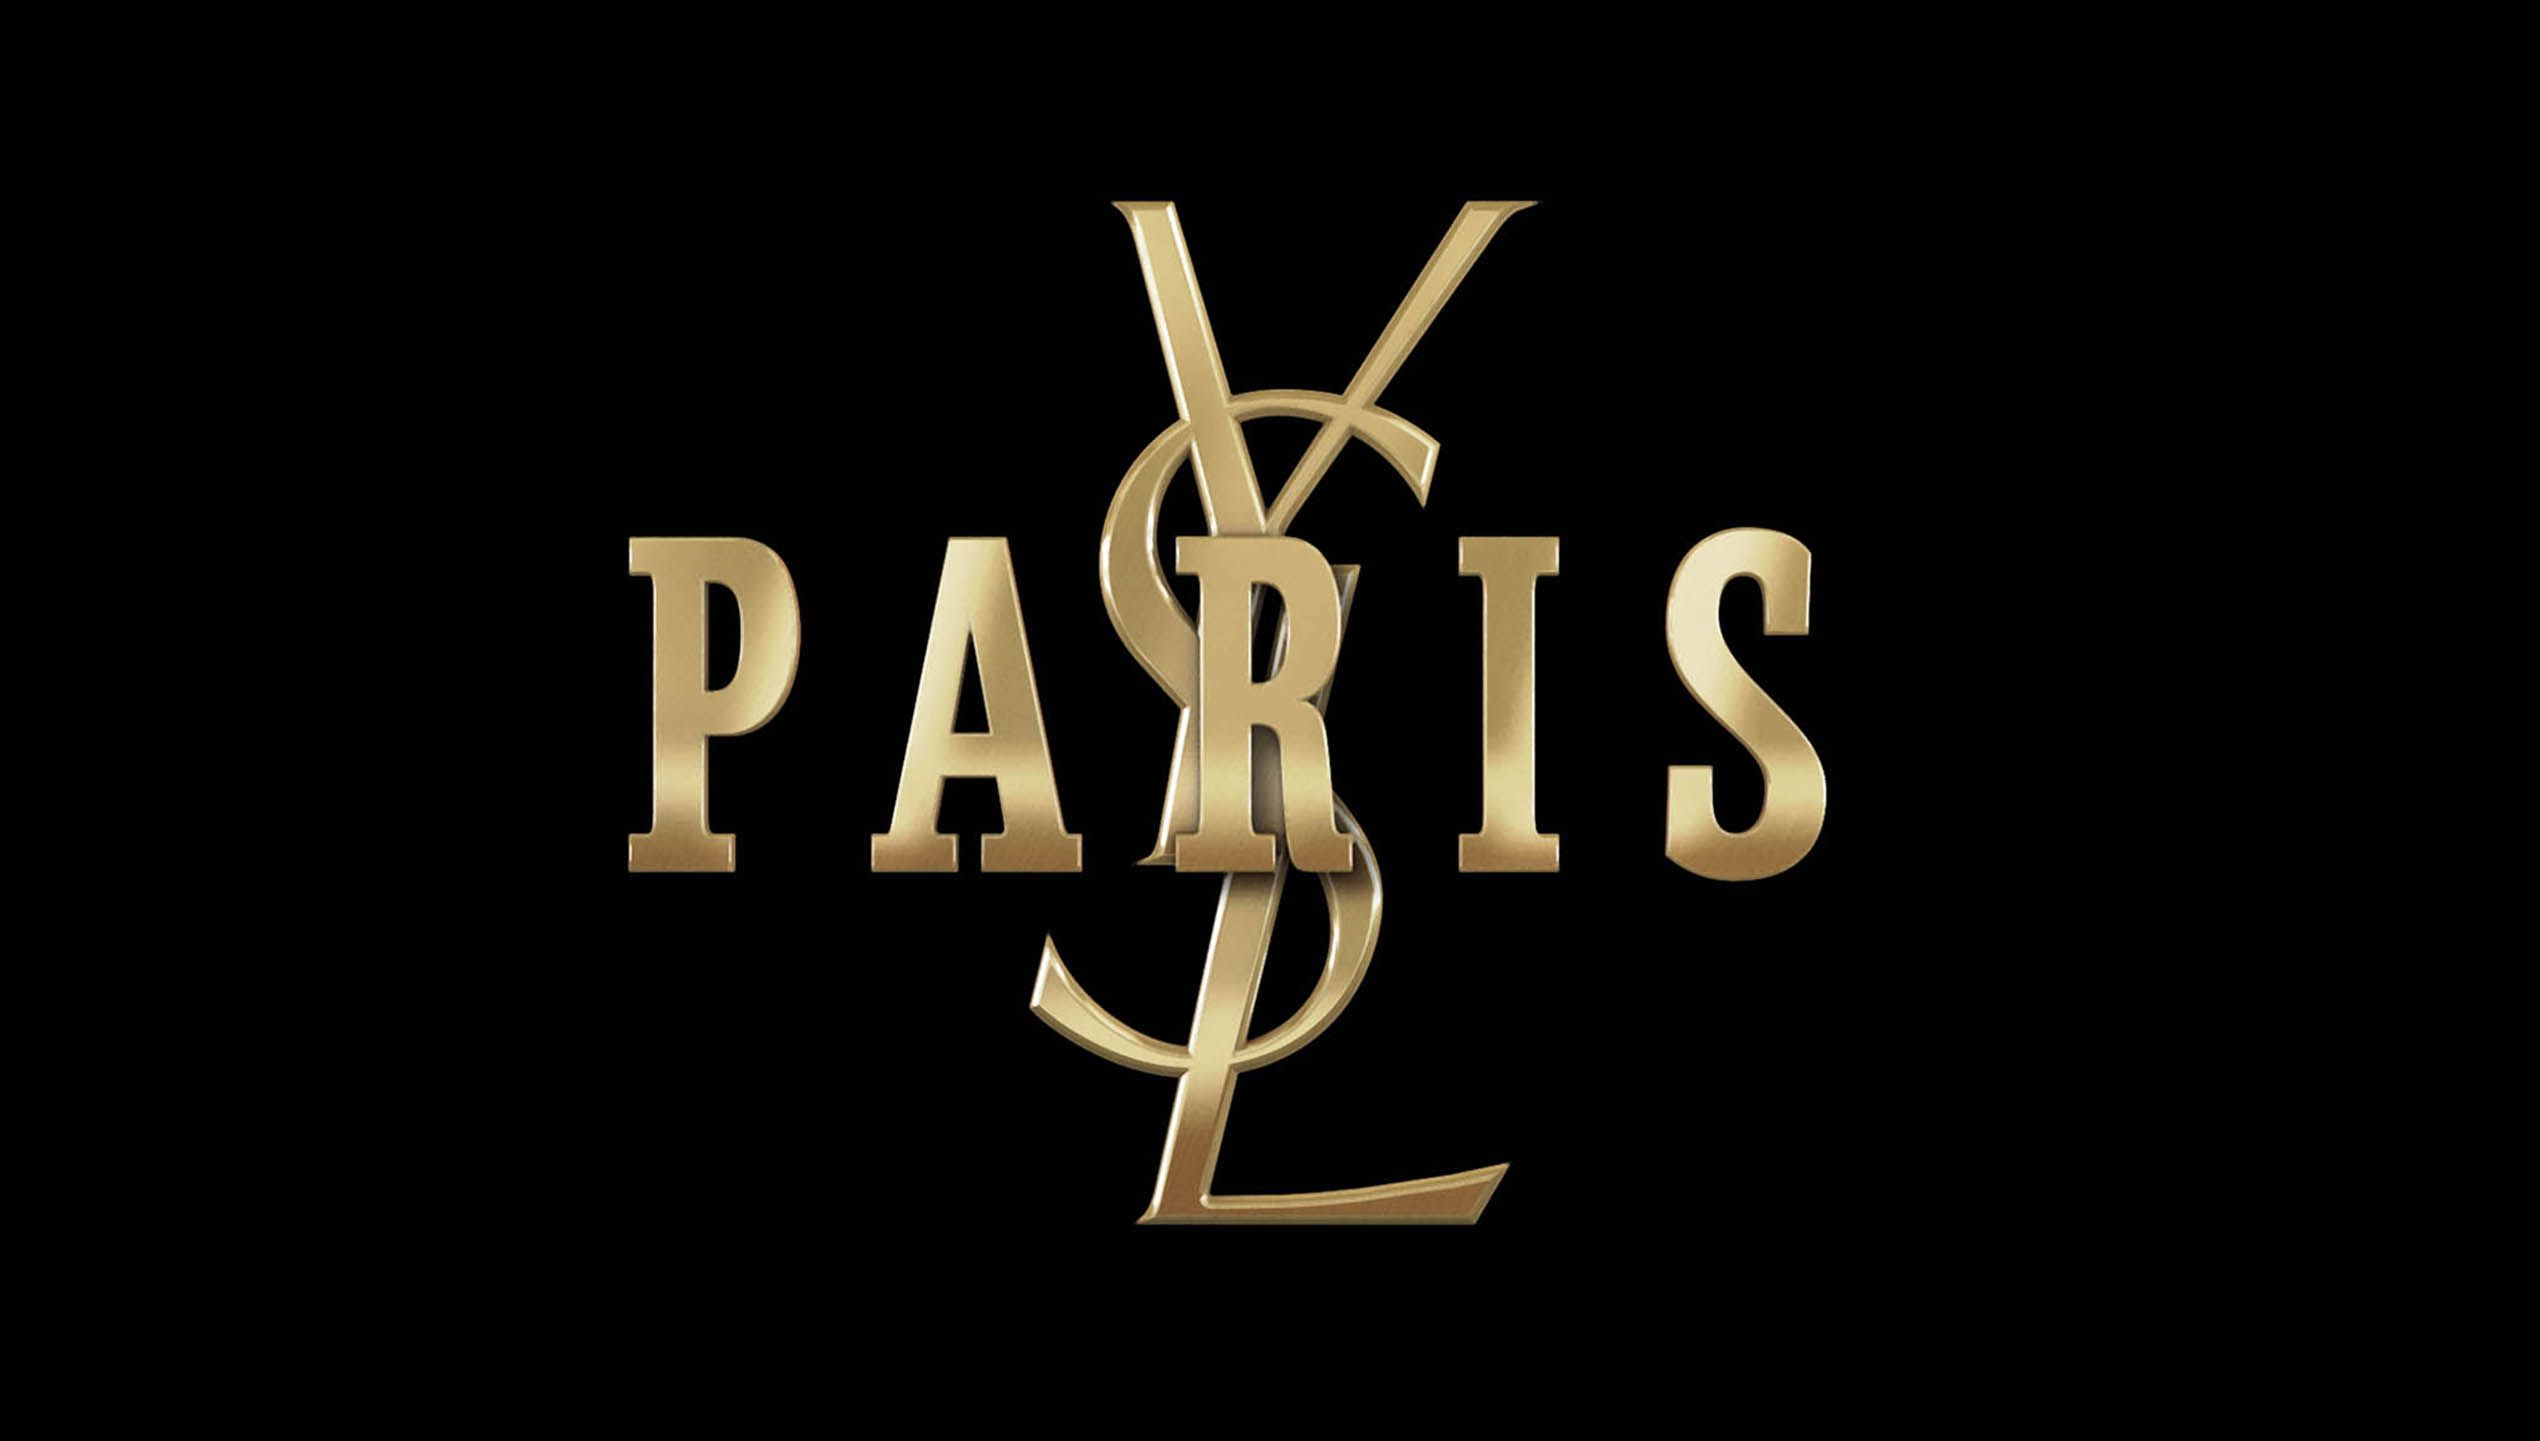 Download wallpapers Yves Saint Laurent logo metal emblem apparel brand  black carbon texture global apparel brands Yves Saint Laurent fashion  concept Yves Saint Laurent emblem for desktop with resolution 2560x1600  High Quality